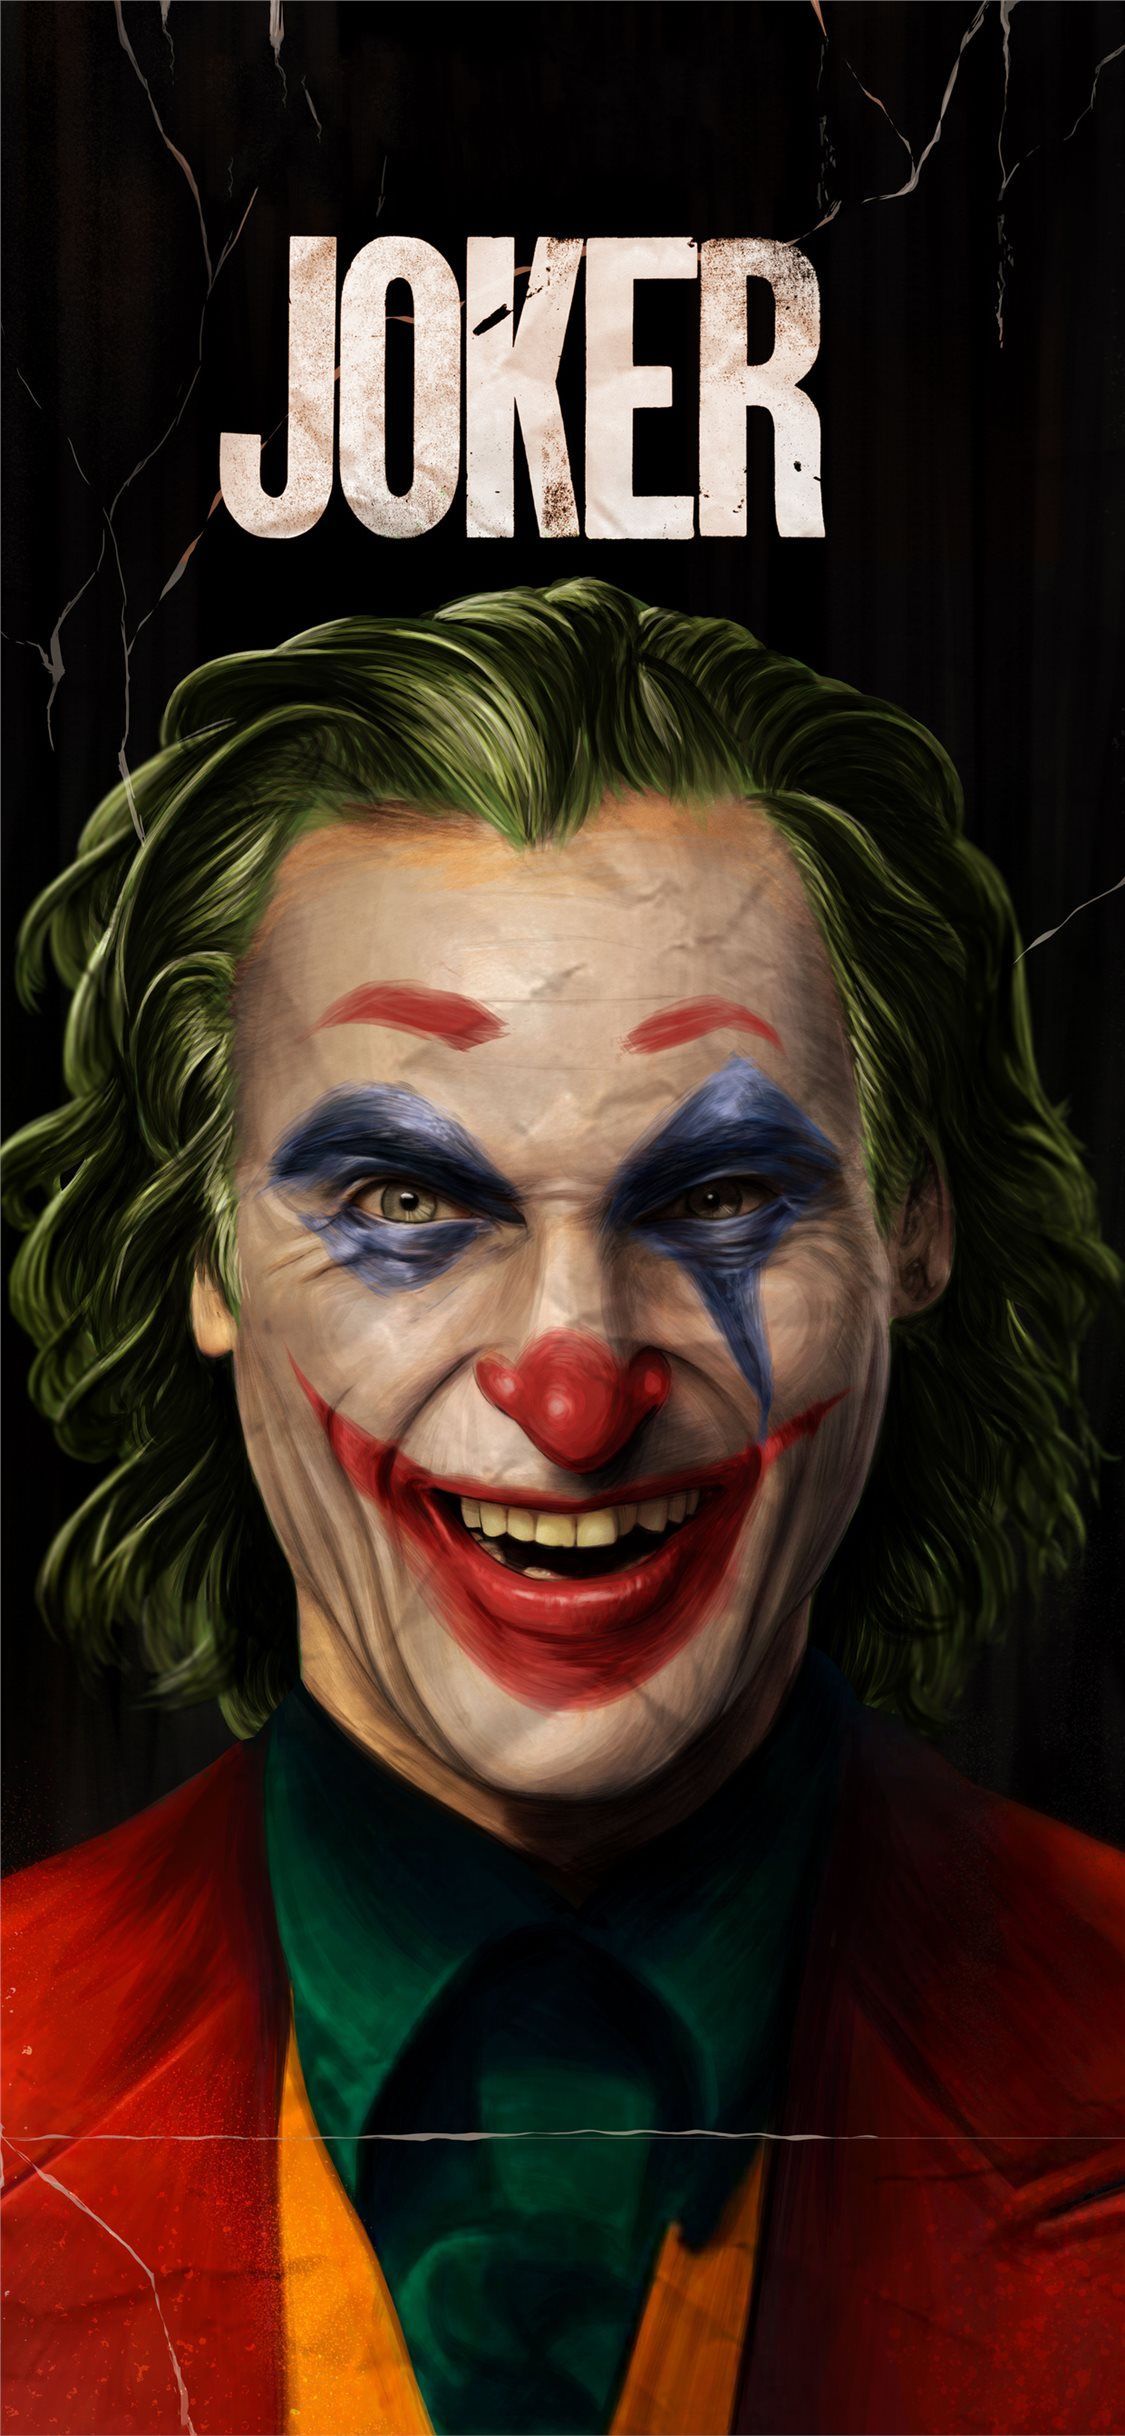 Joker 2019 iPhone Wallpaper Free Joker 2019 iPhone Background